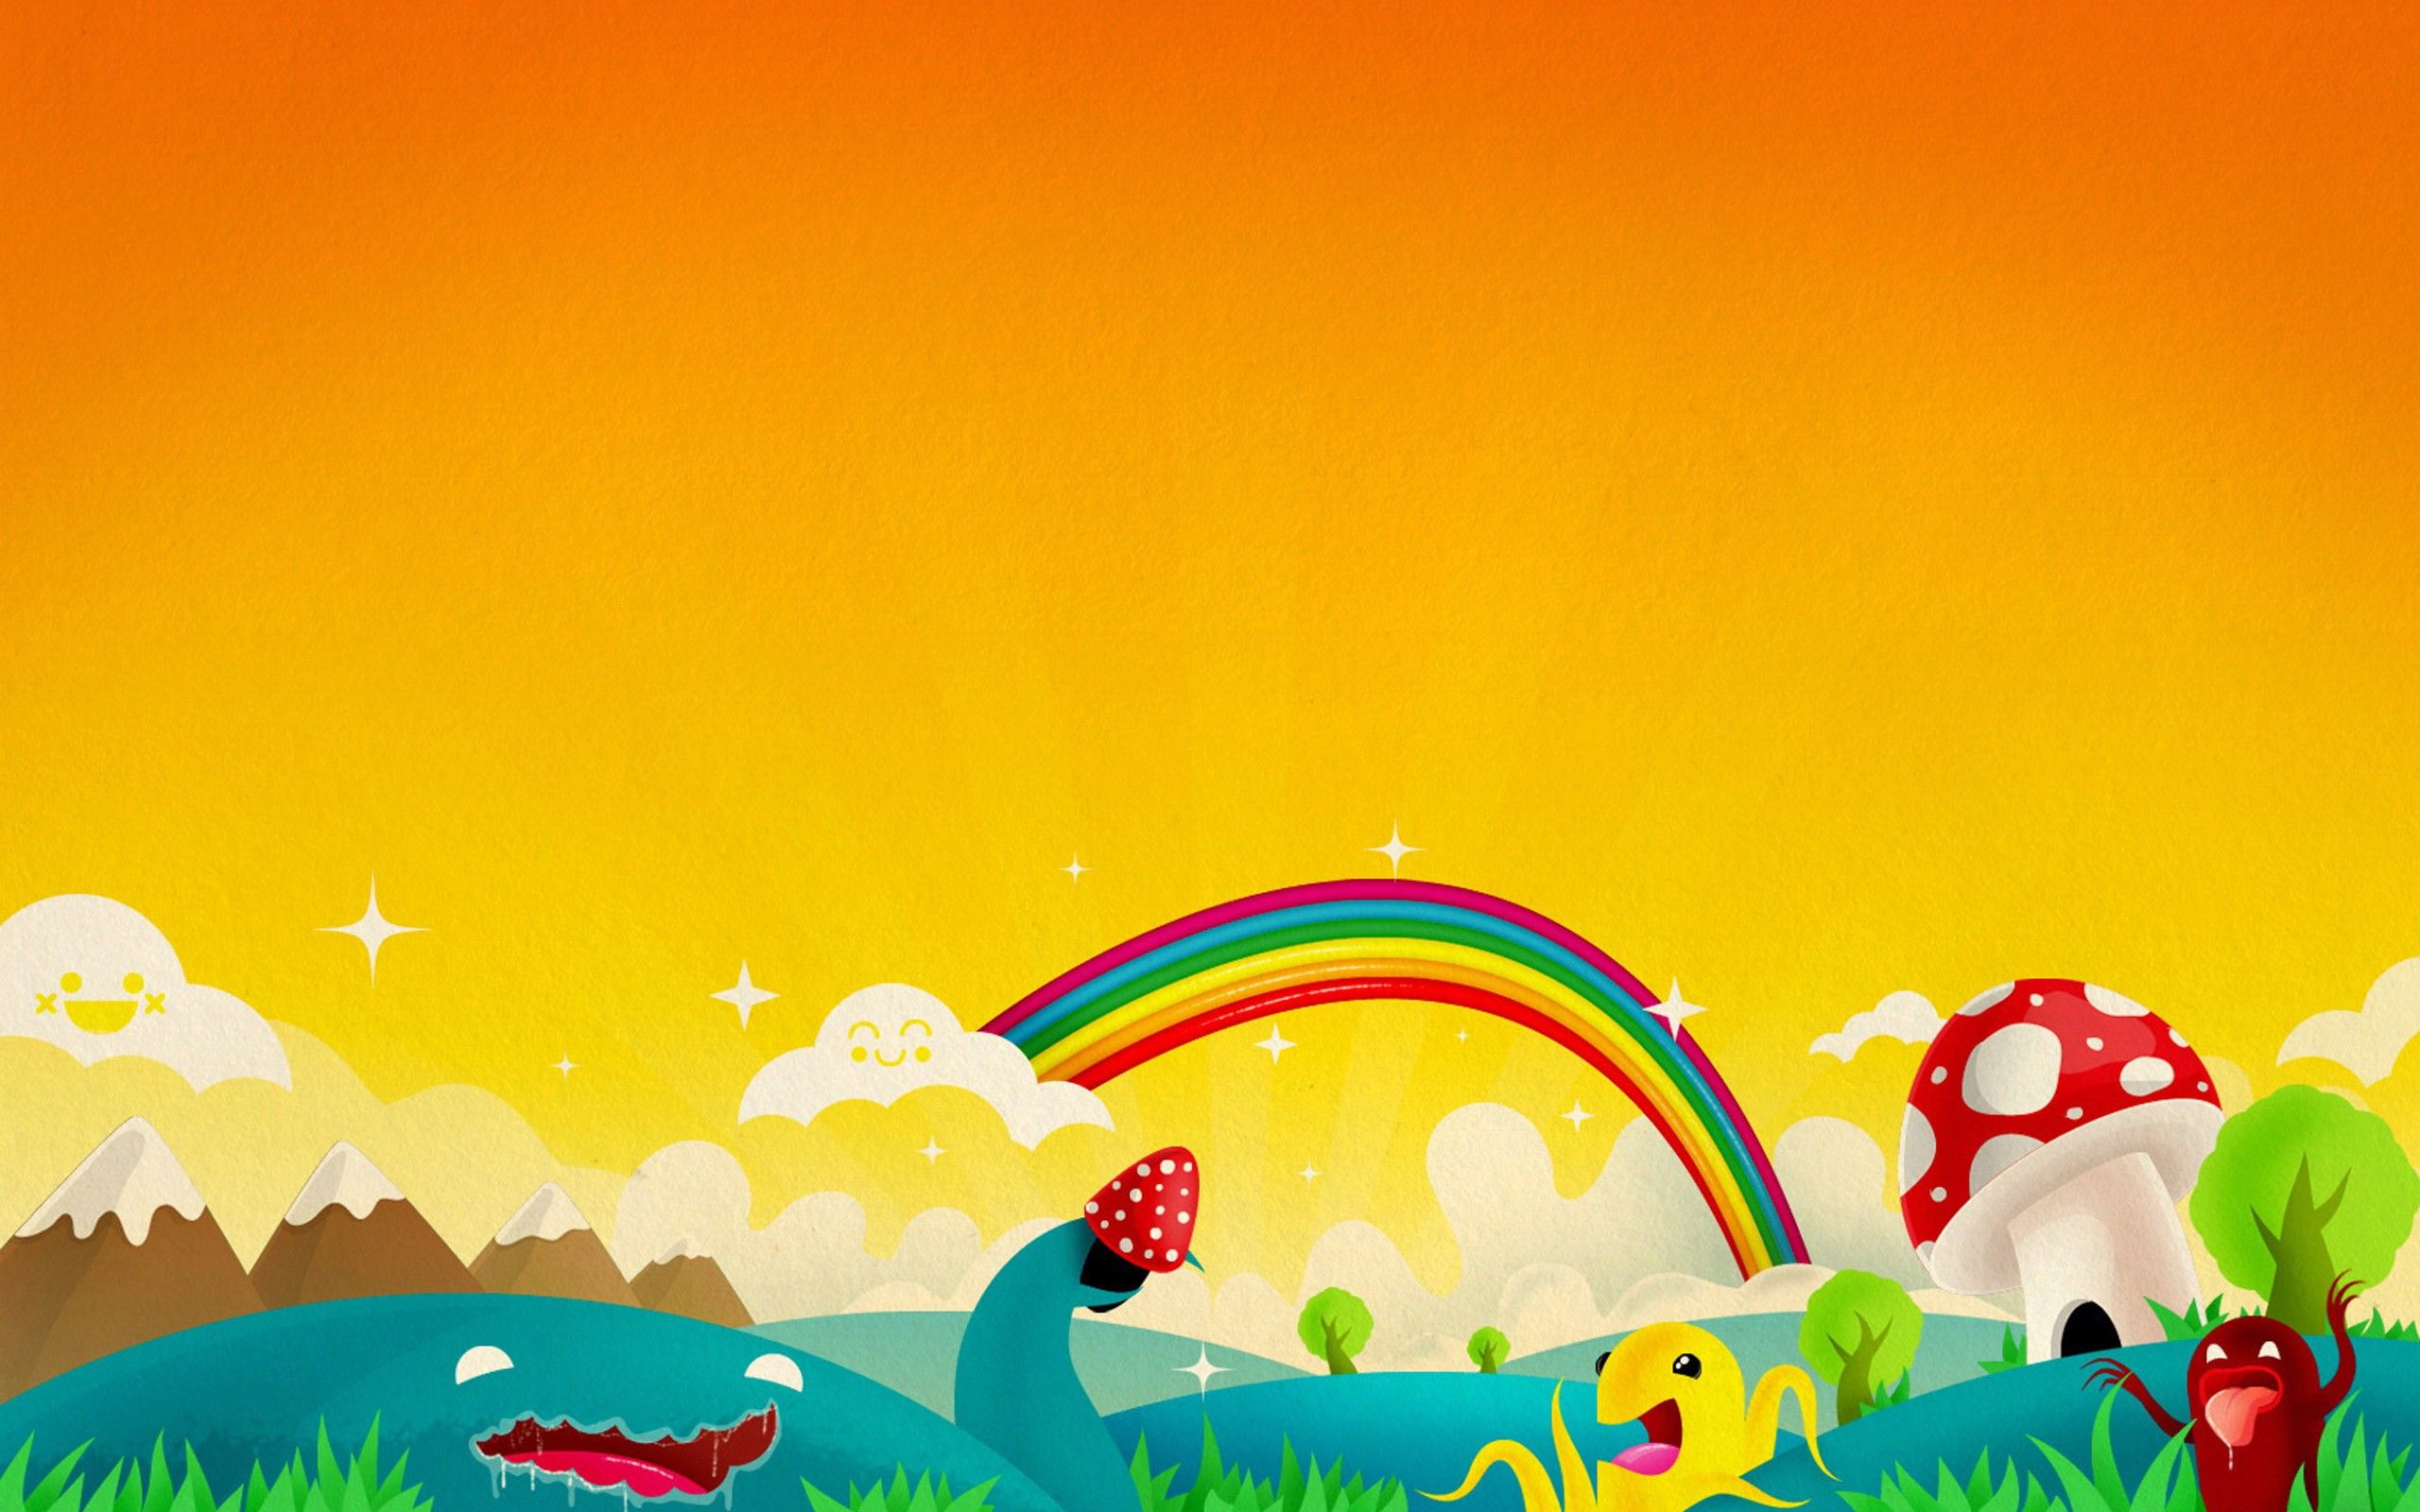 Download wallpaper: Rainbow, sunset, orange Sky, picture, download